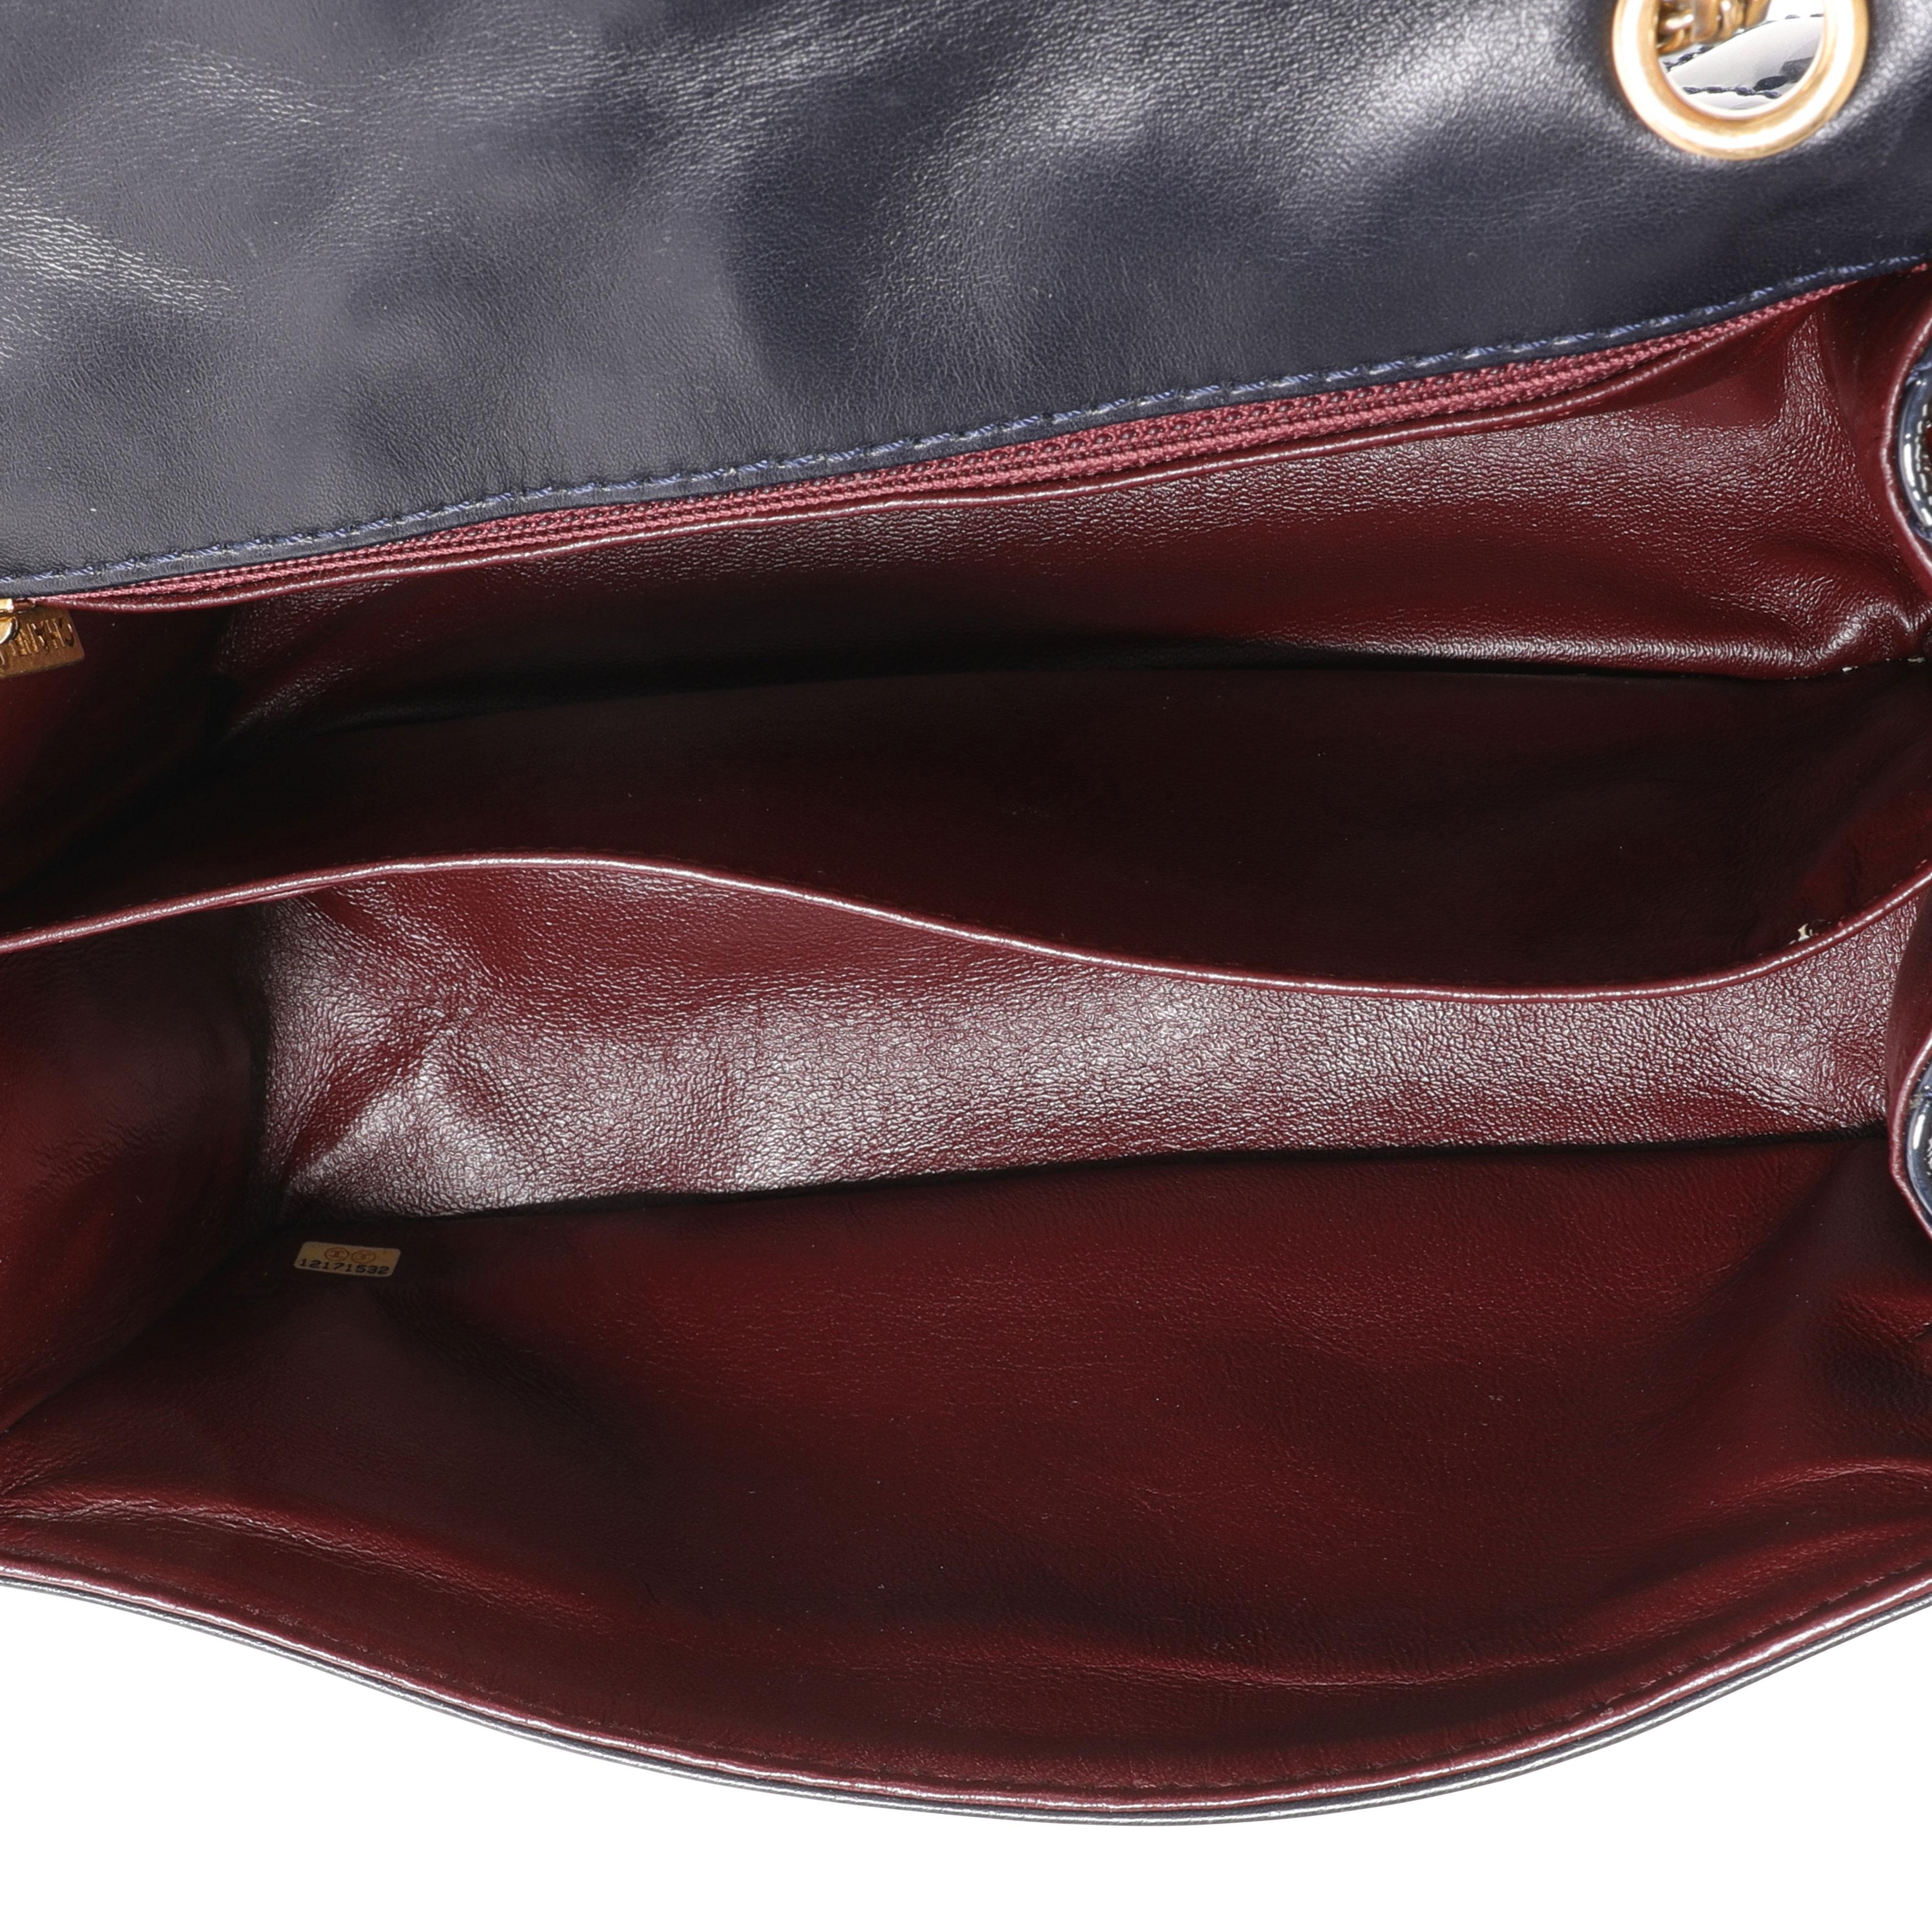 Chanel Marine Foncé Quilted Patent Leather Reissue Double Compartment Flap Bag 1